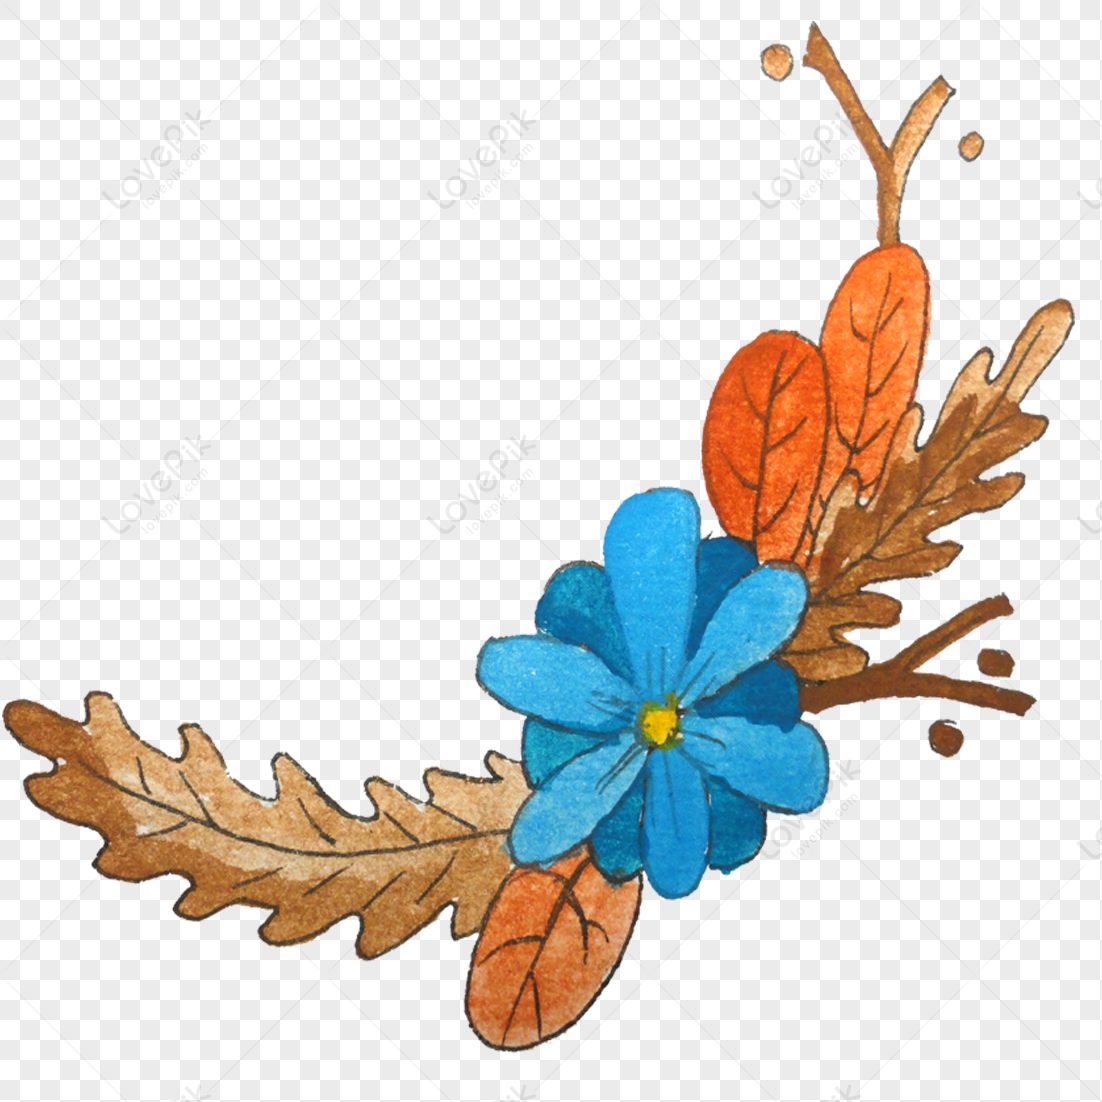 Flores Azules PNG Imágenes Gratis - Lovepik